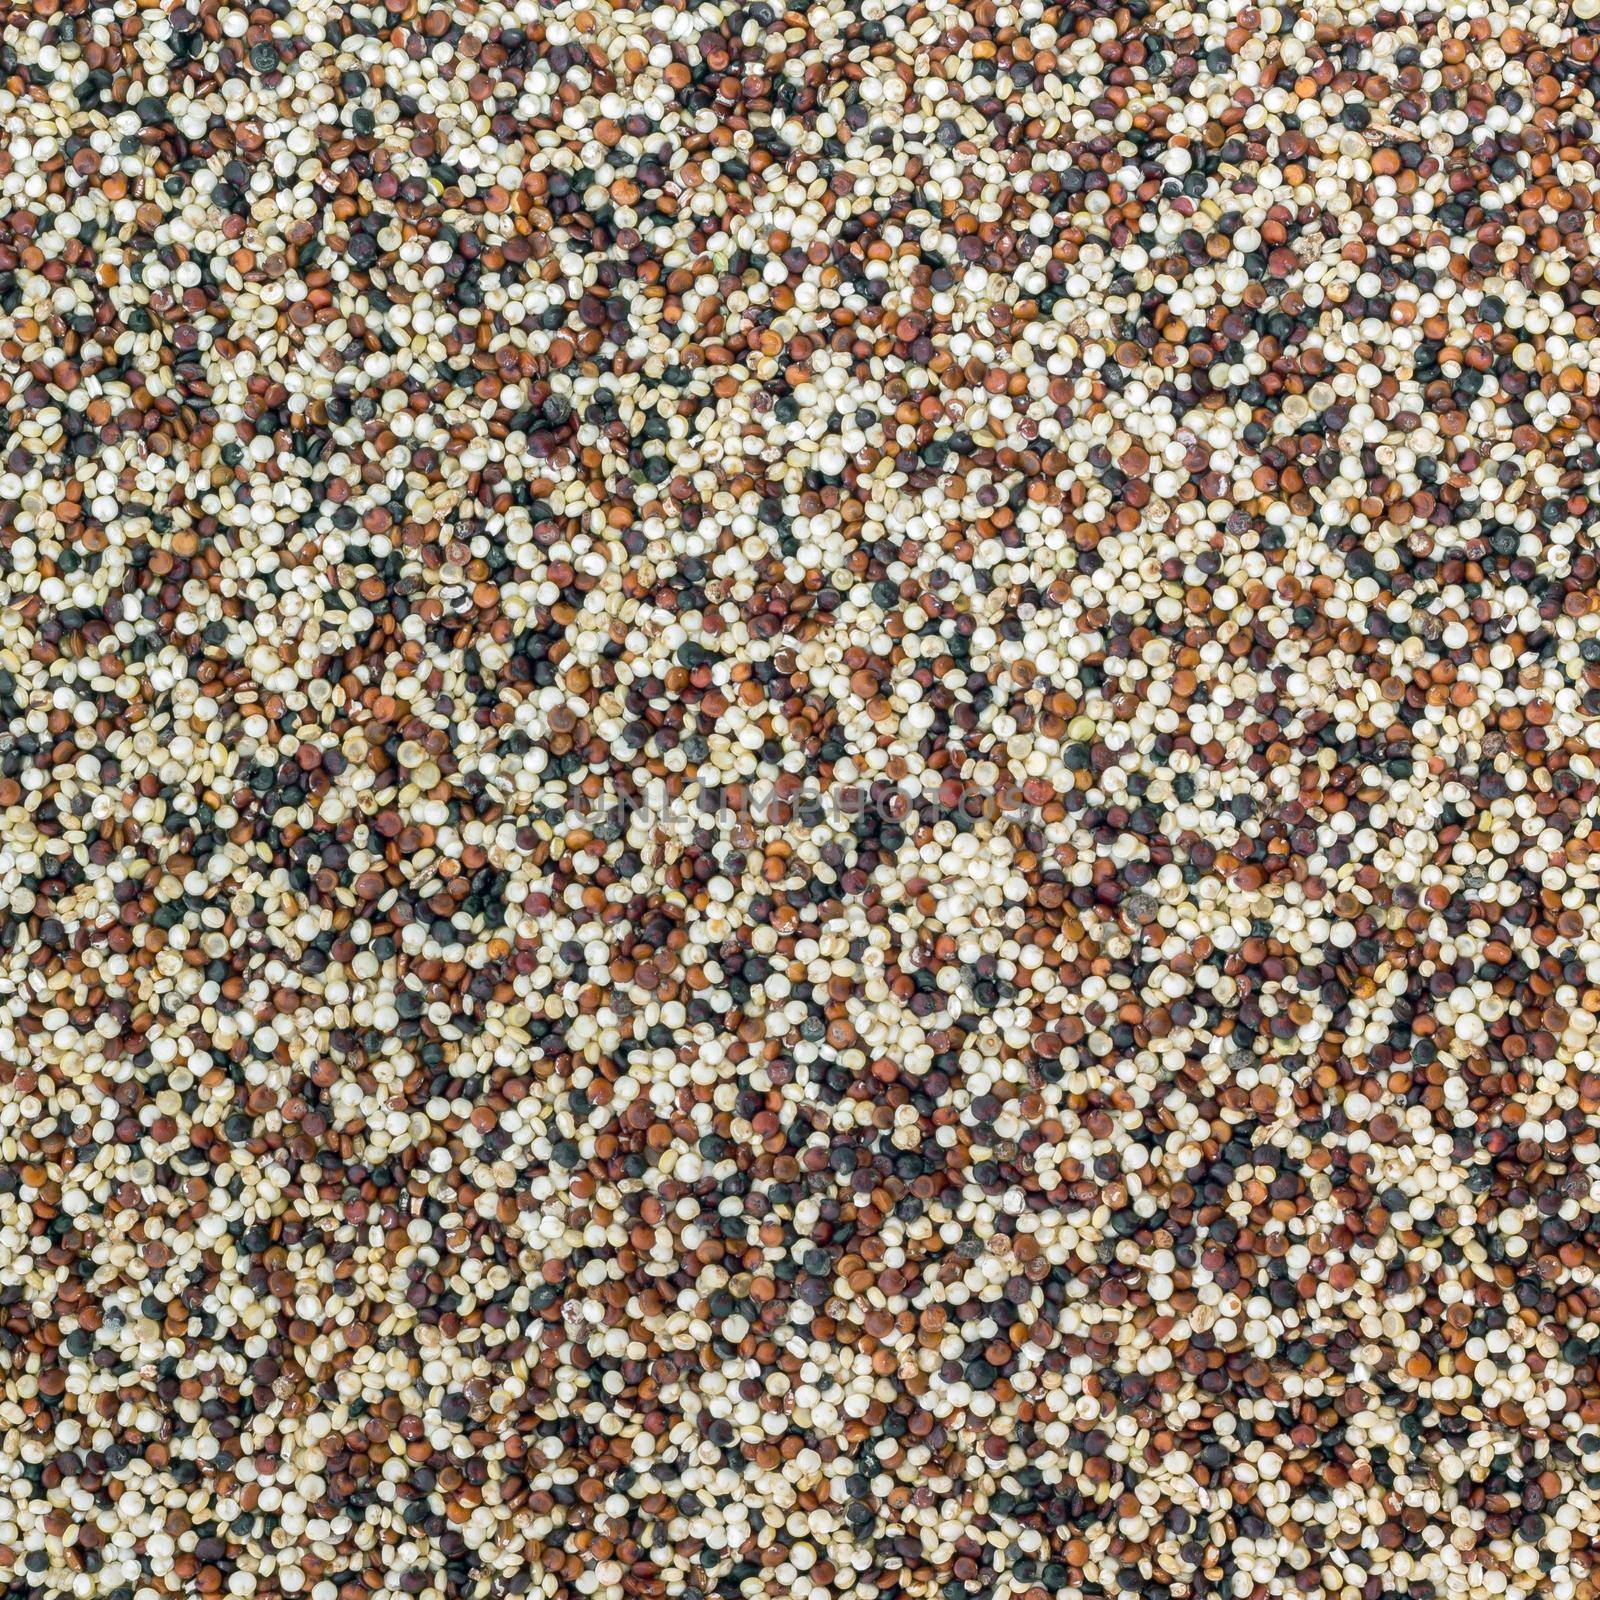 Seeds of quinoa by germanopoli